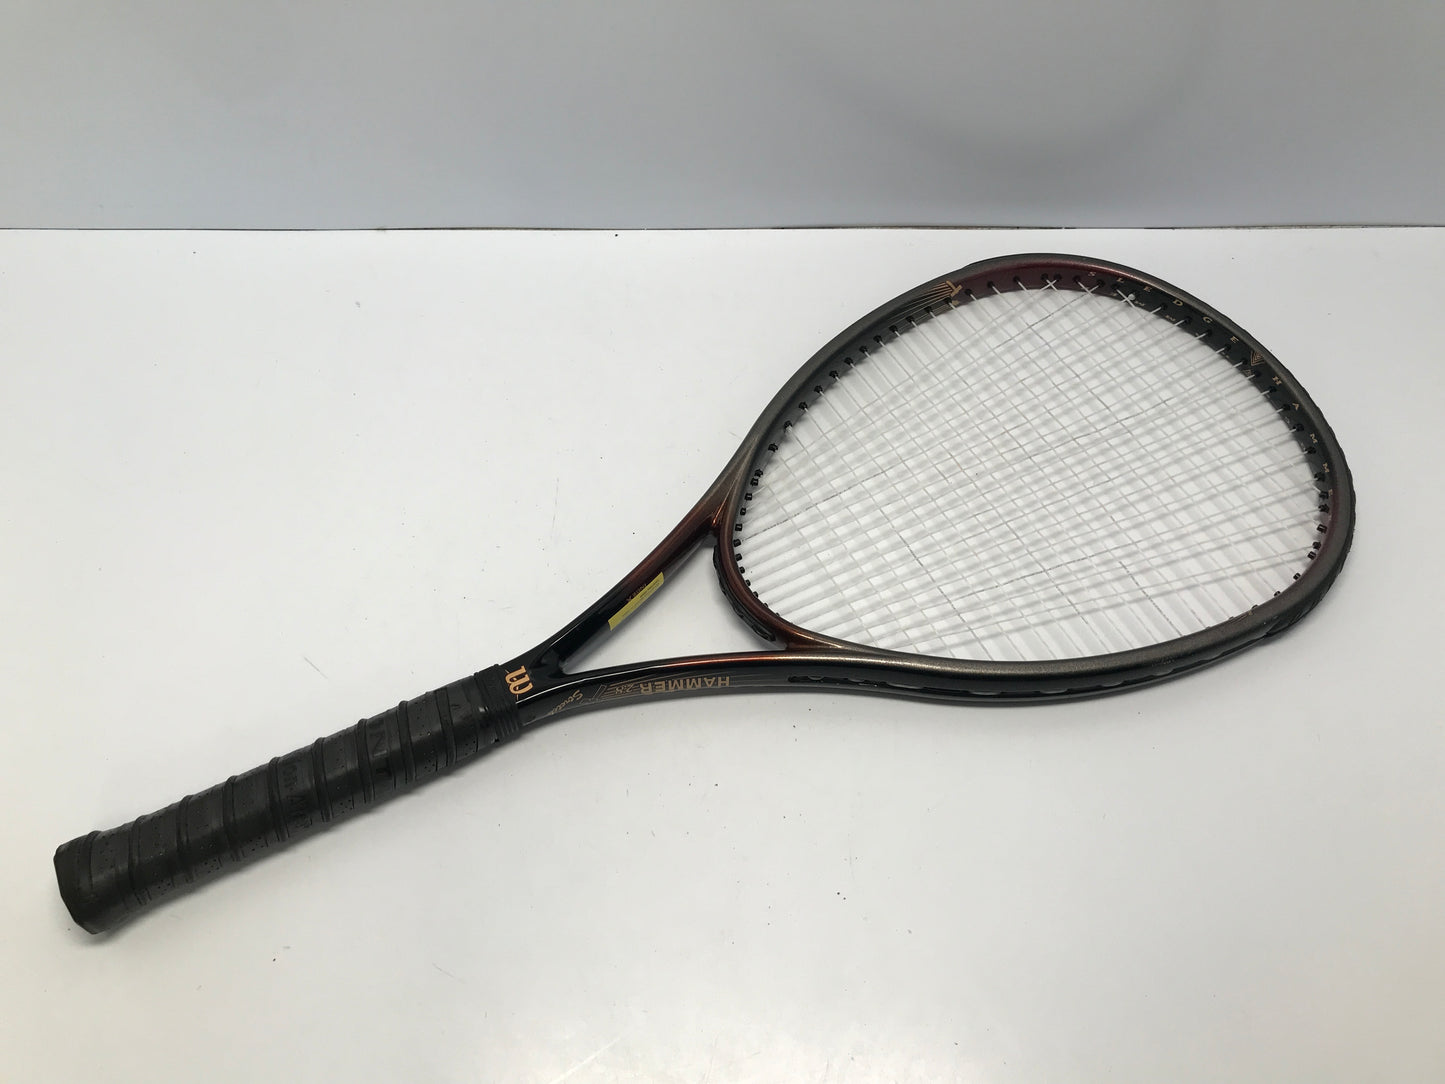 Tennis Racquet Wilson Sledge Hammer 2.8 Stretch Oversize Excellent